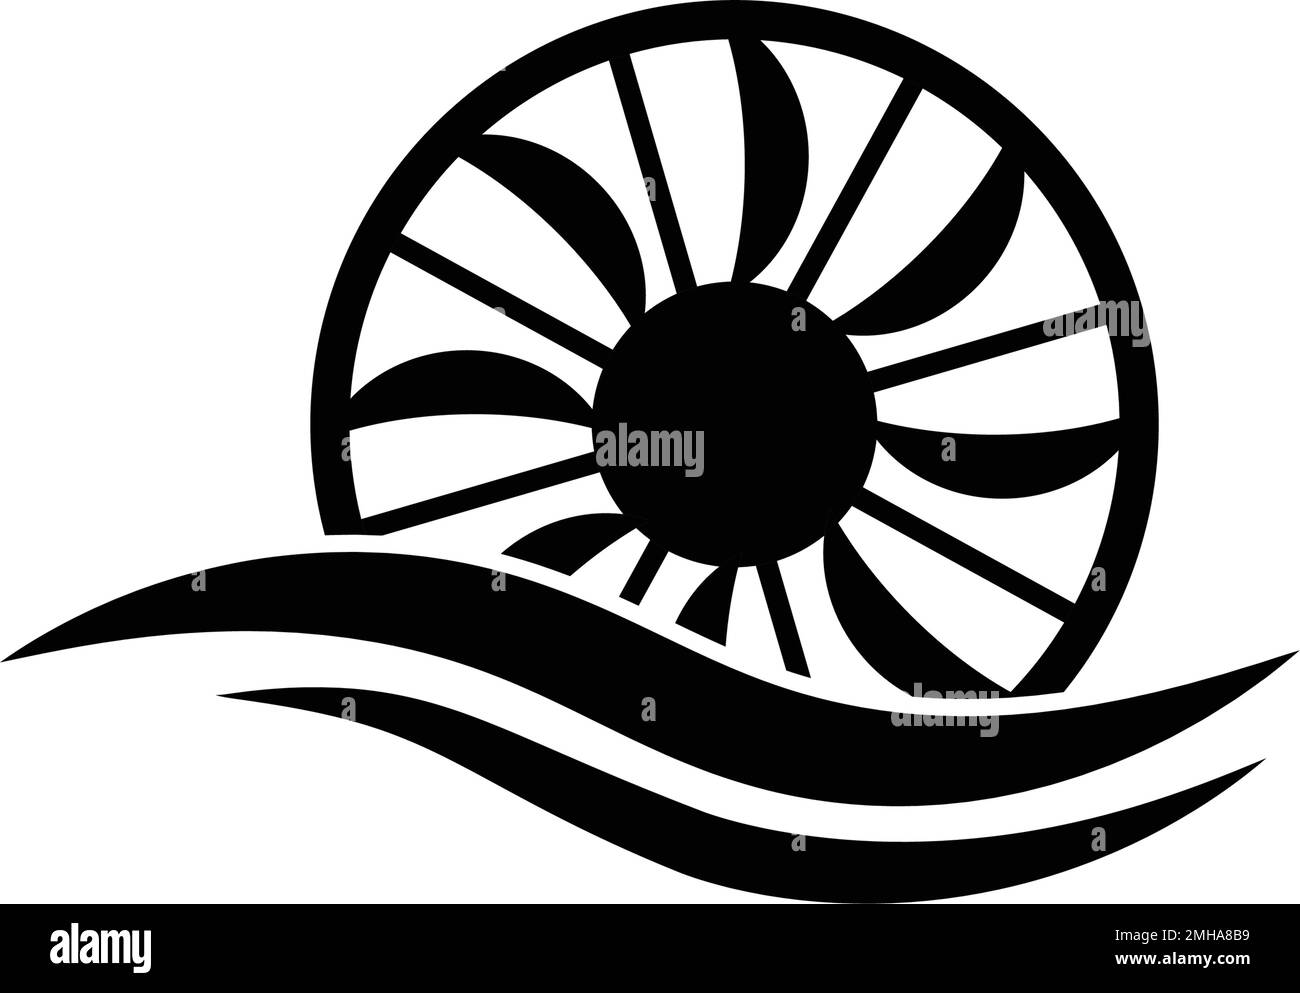 water wheel logo vektor template Stock Vector